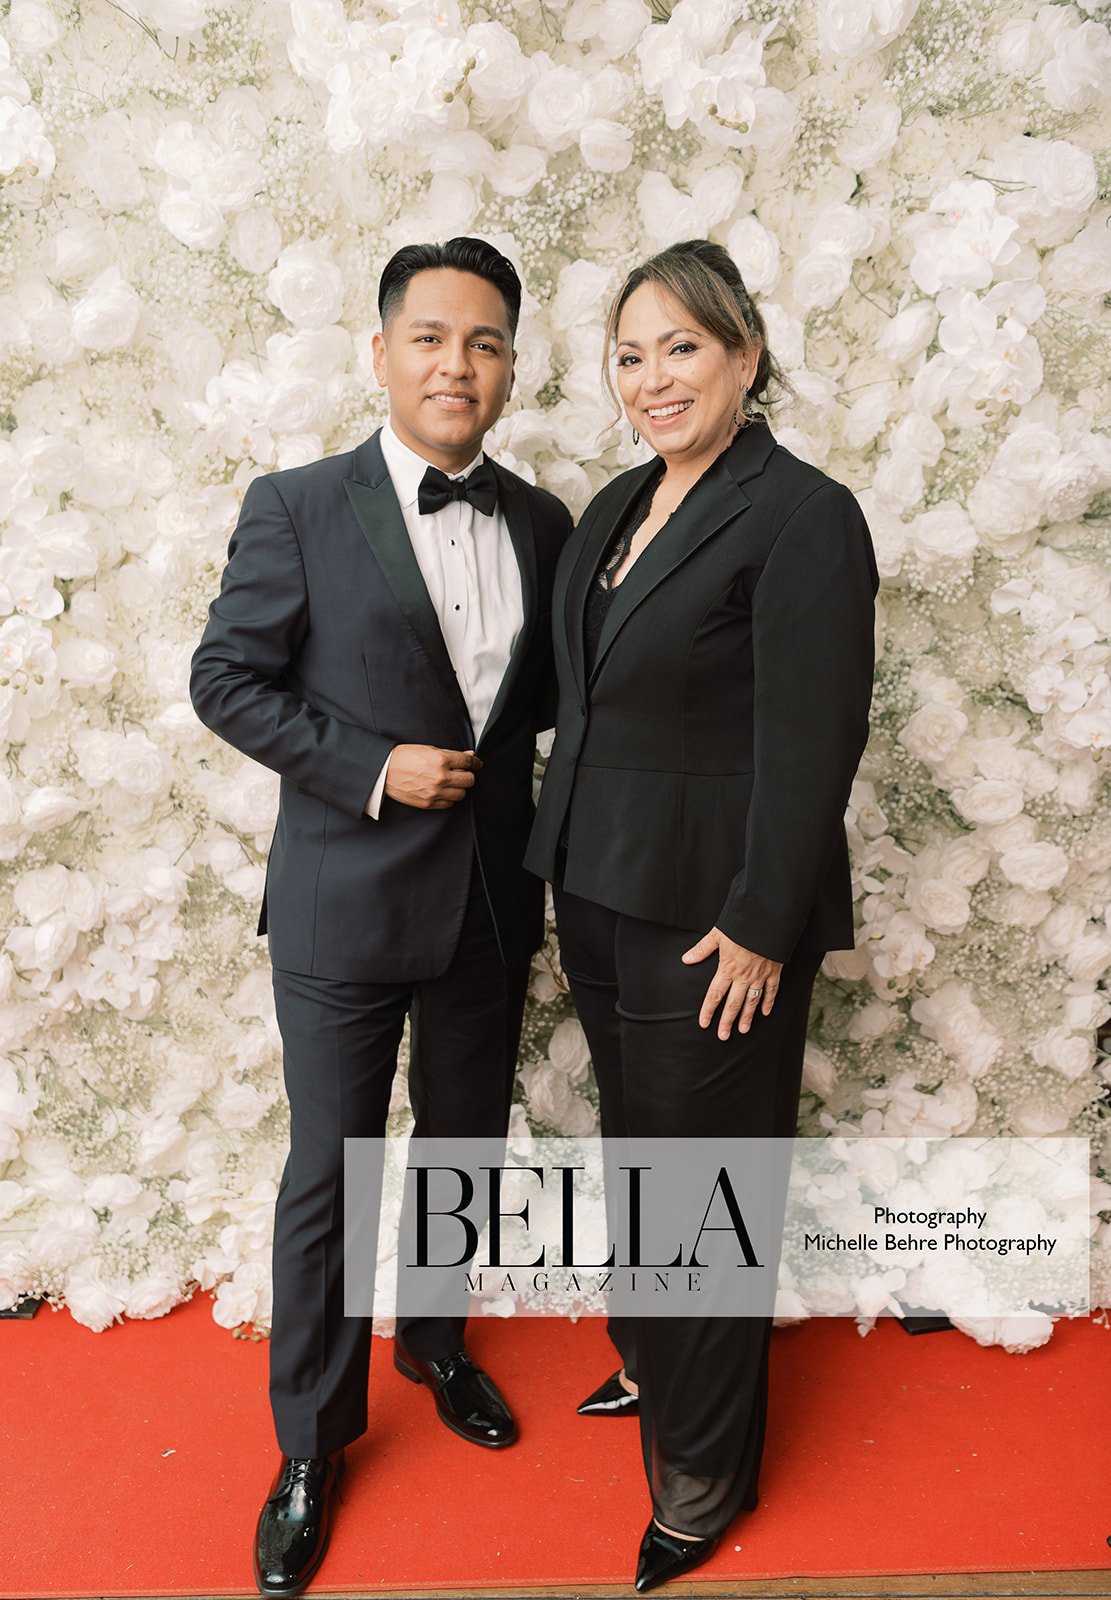 Michelle-Behre-Photography-BELLA-Magazine-Wedding-Event-La-Pulperia-New-York-81.jpg